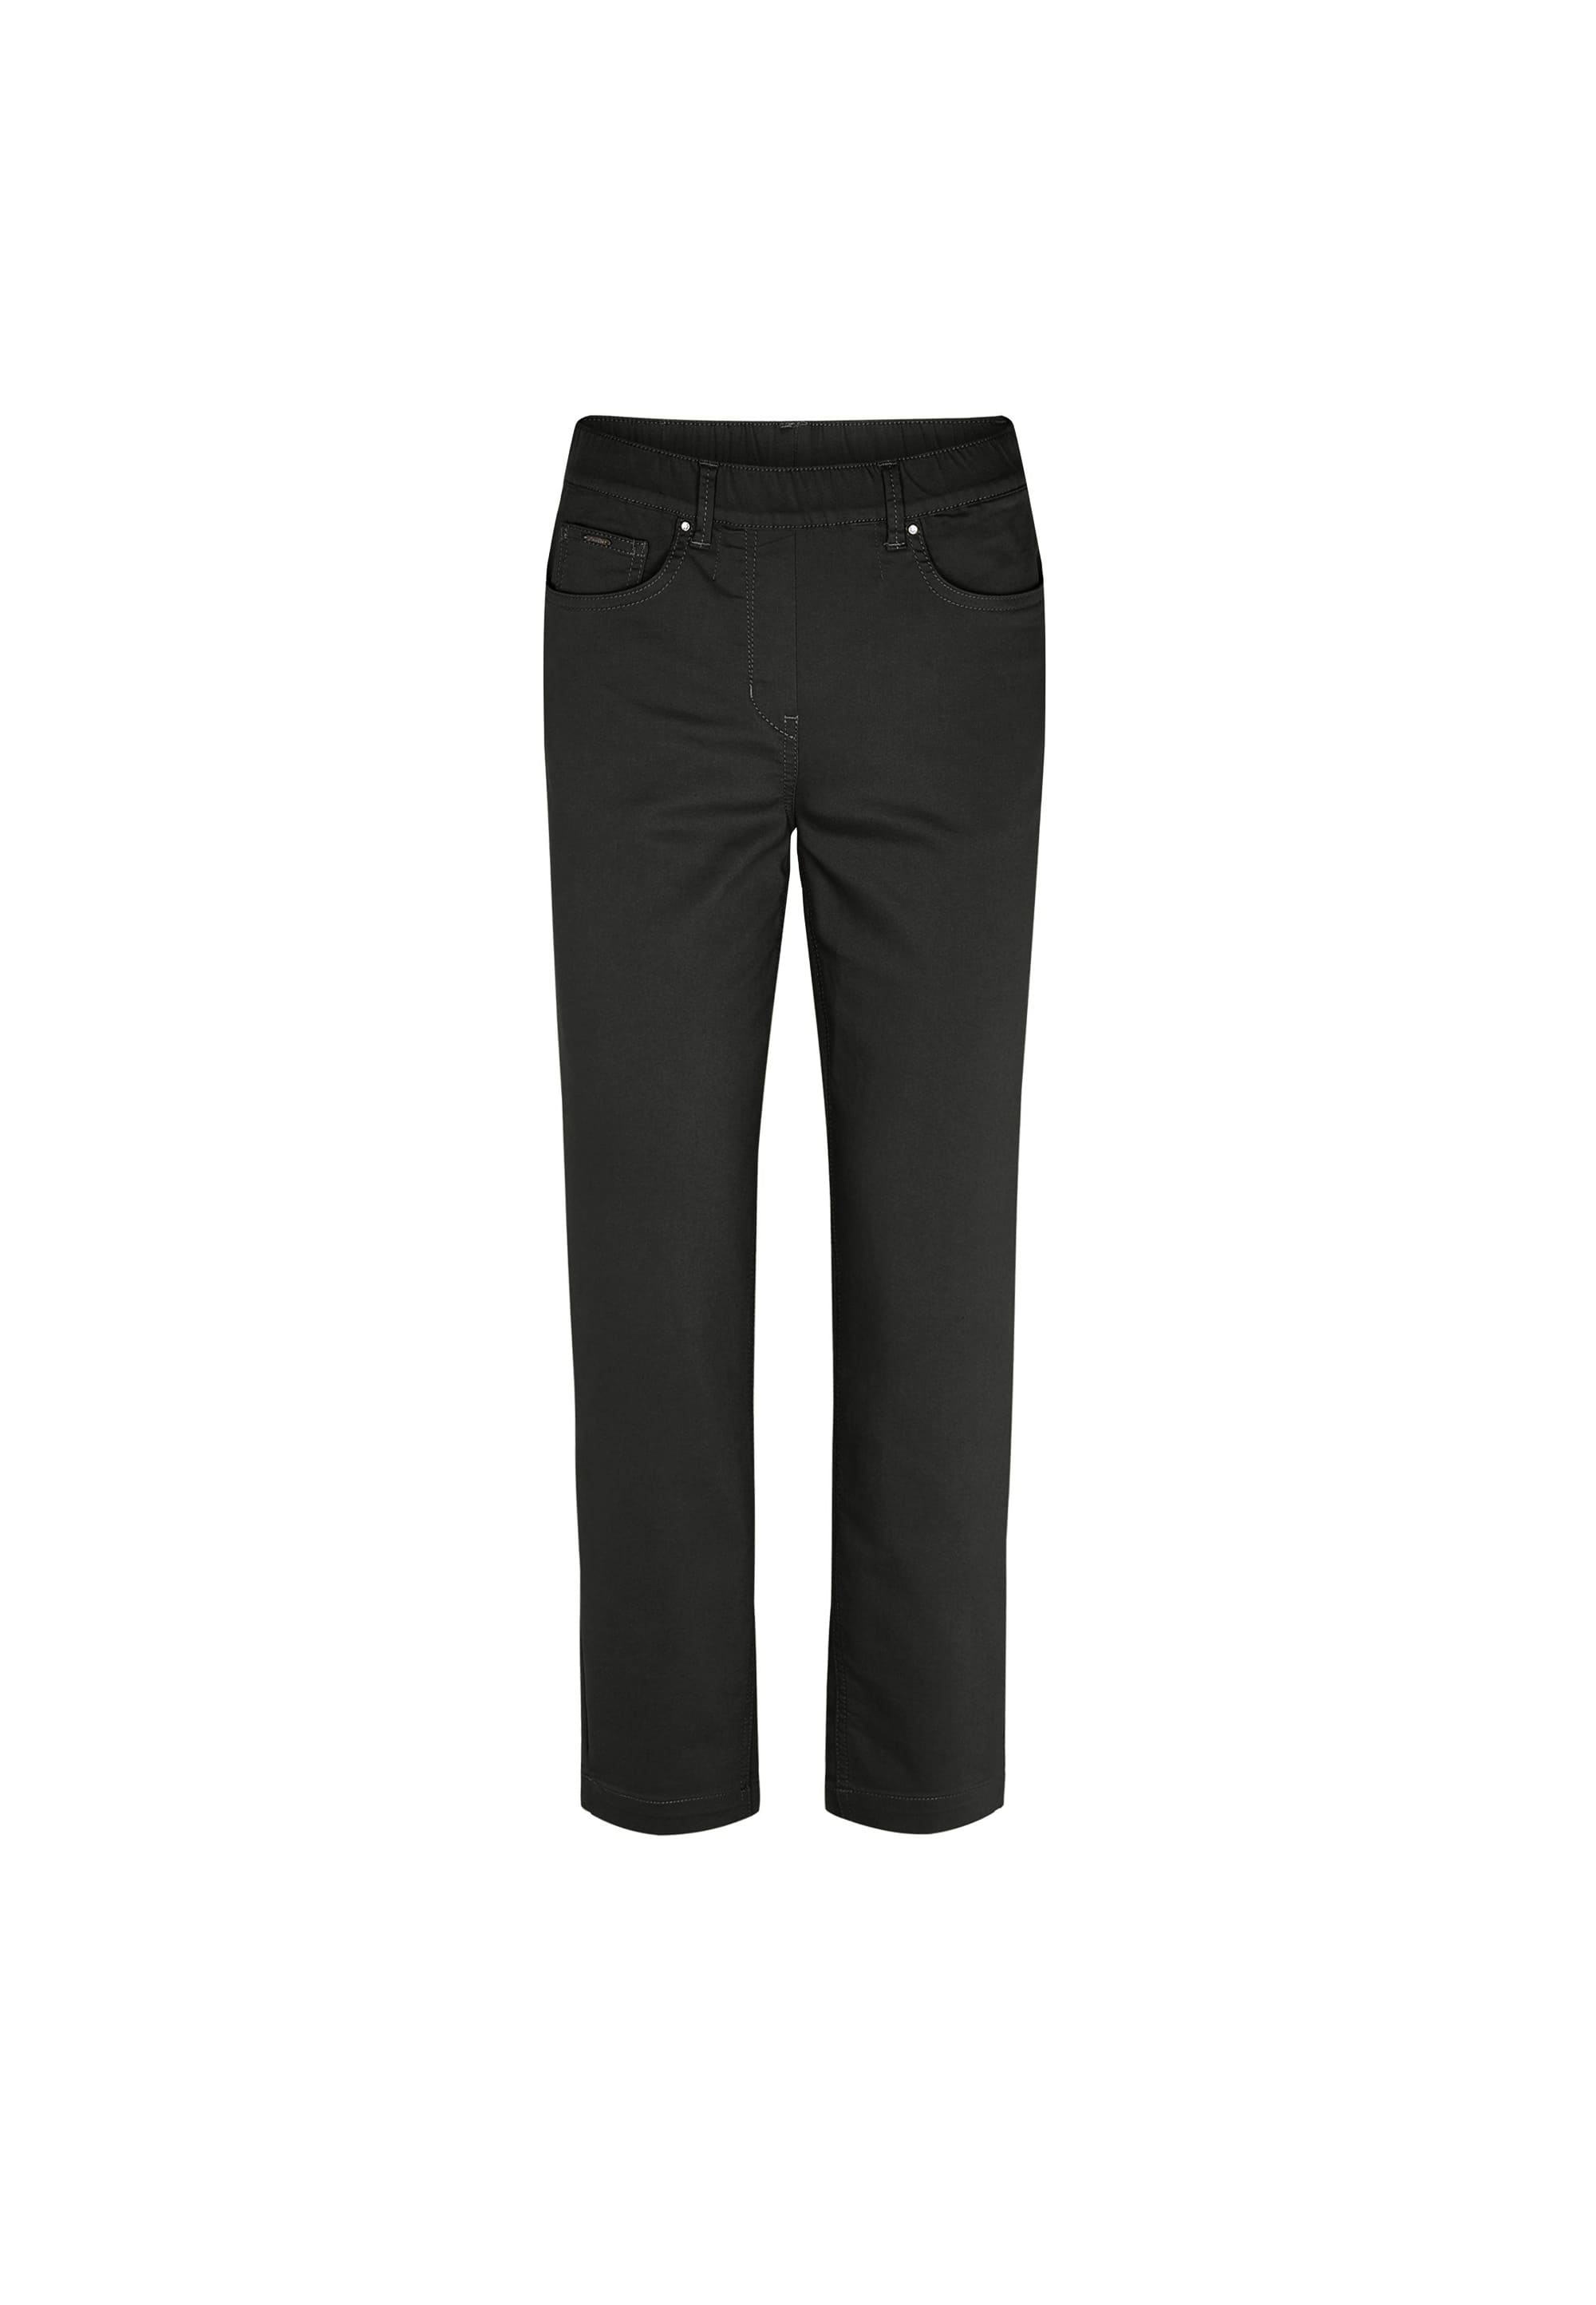 LAURIE Hannah Regular - Medium Length Trousers REGULAR 99000 Black